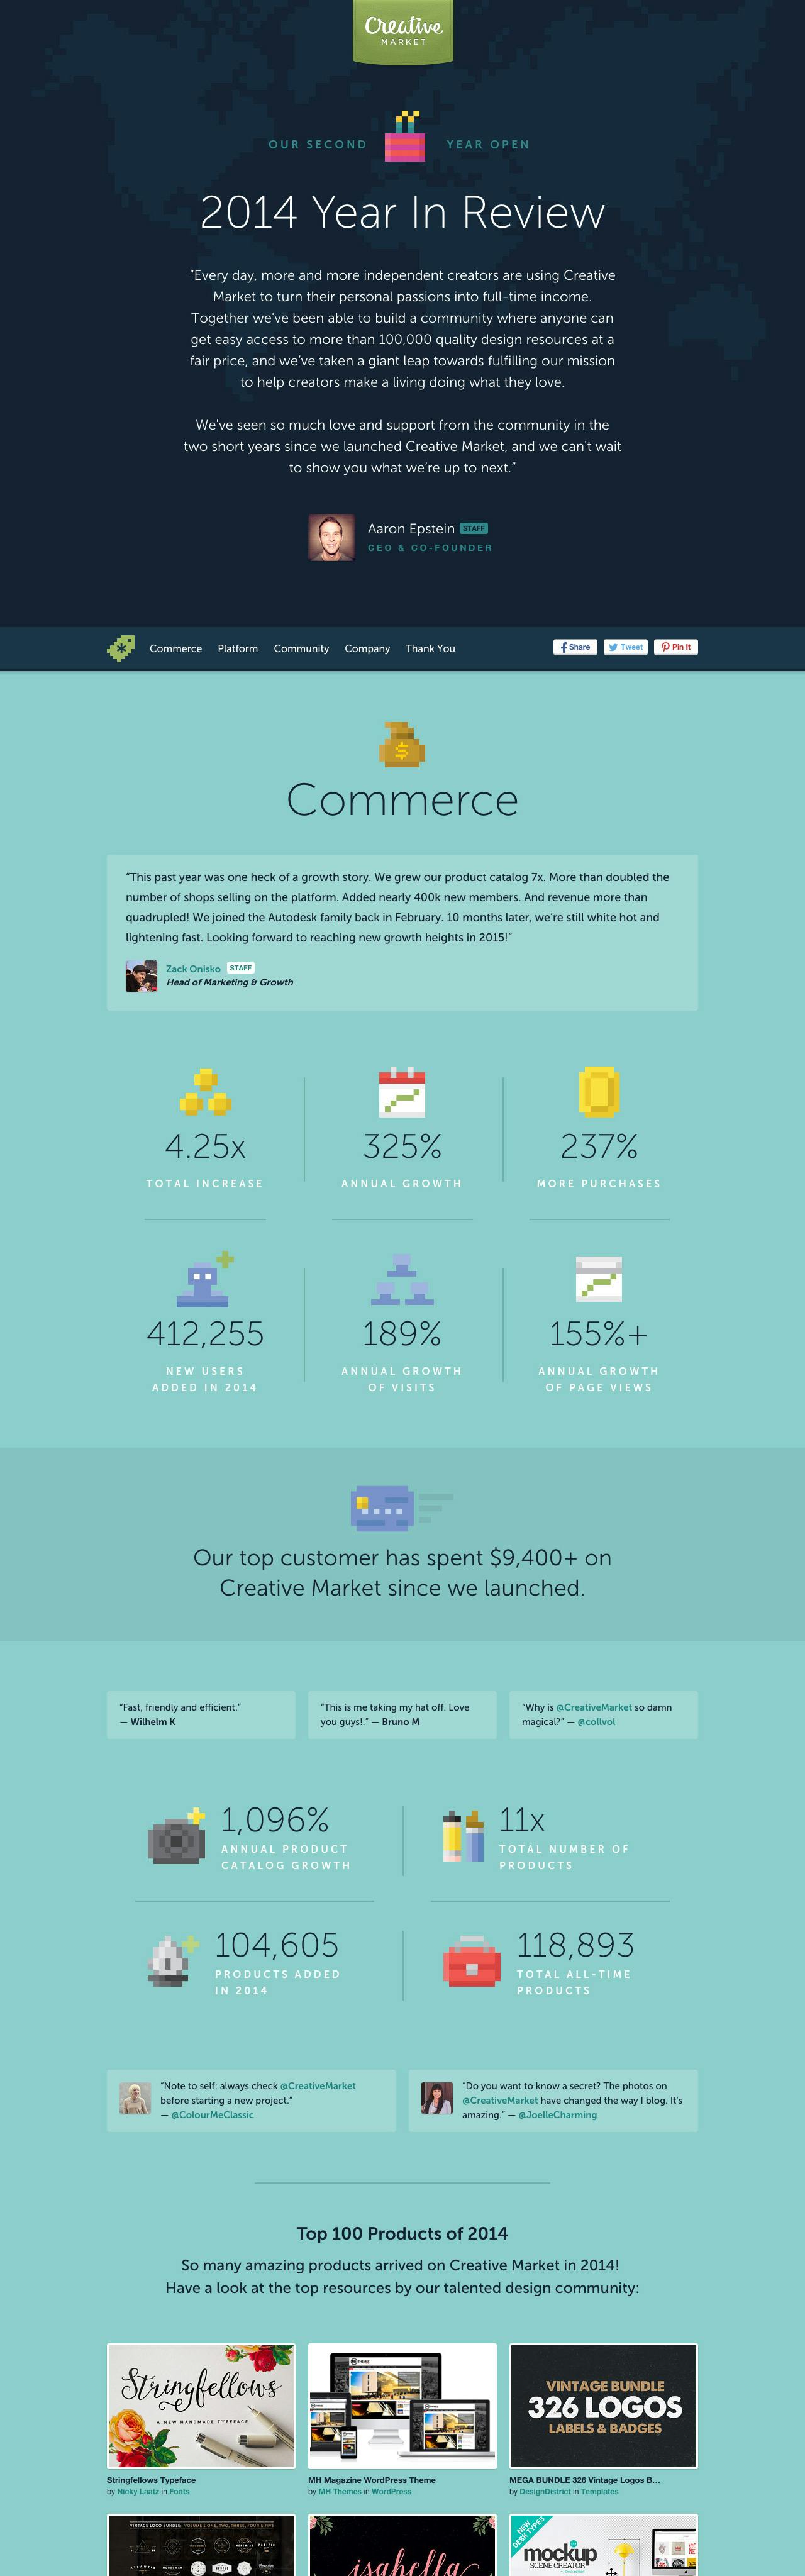 Creative Market 2014 Year In Review Website Screenshot